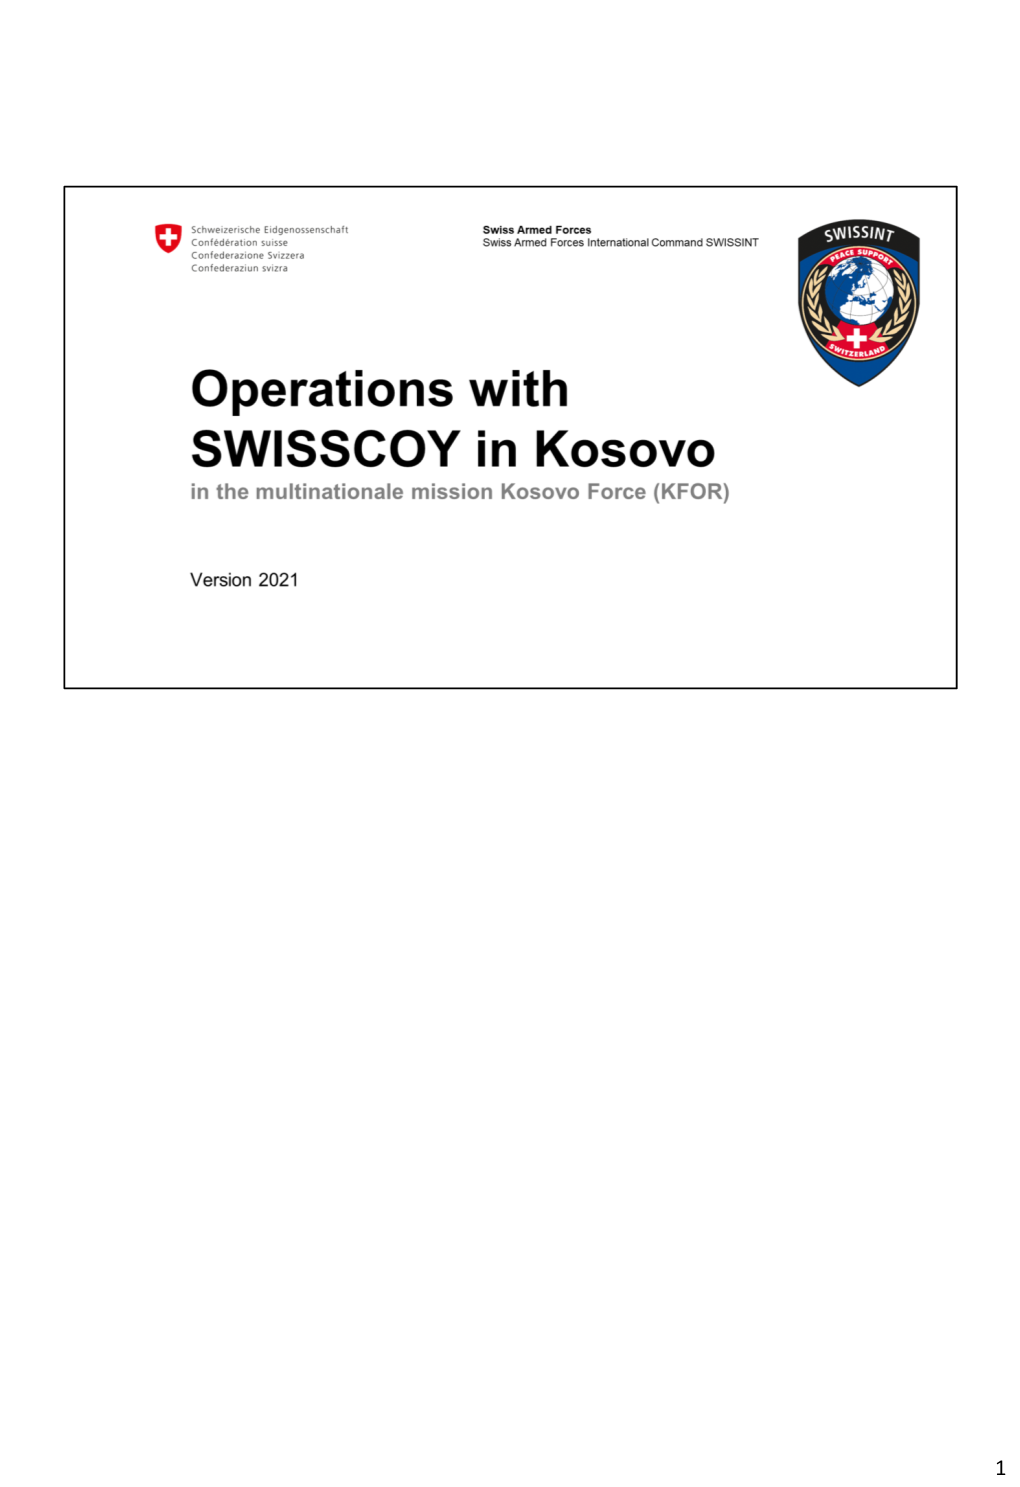 Background Information About SWISSCOY